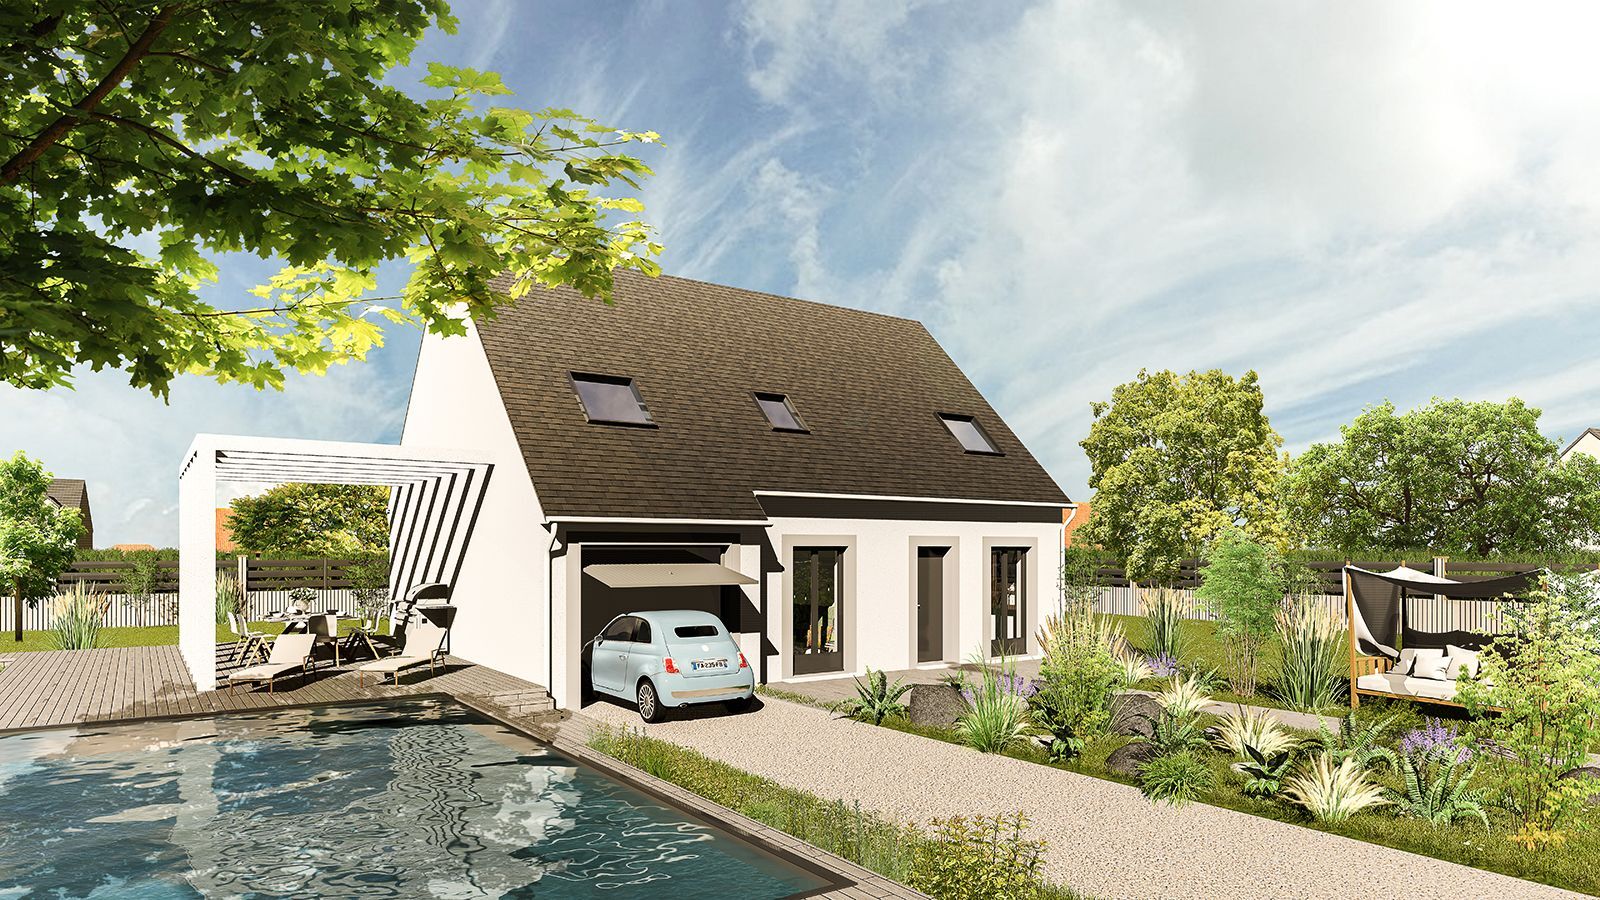 Vente Maison neuve 112 m² à Amilly 252 939 €